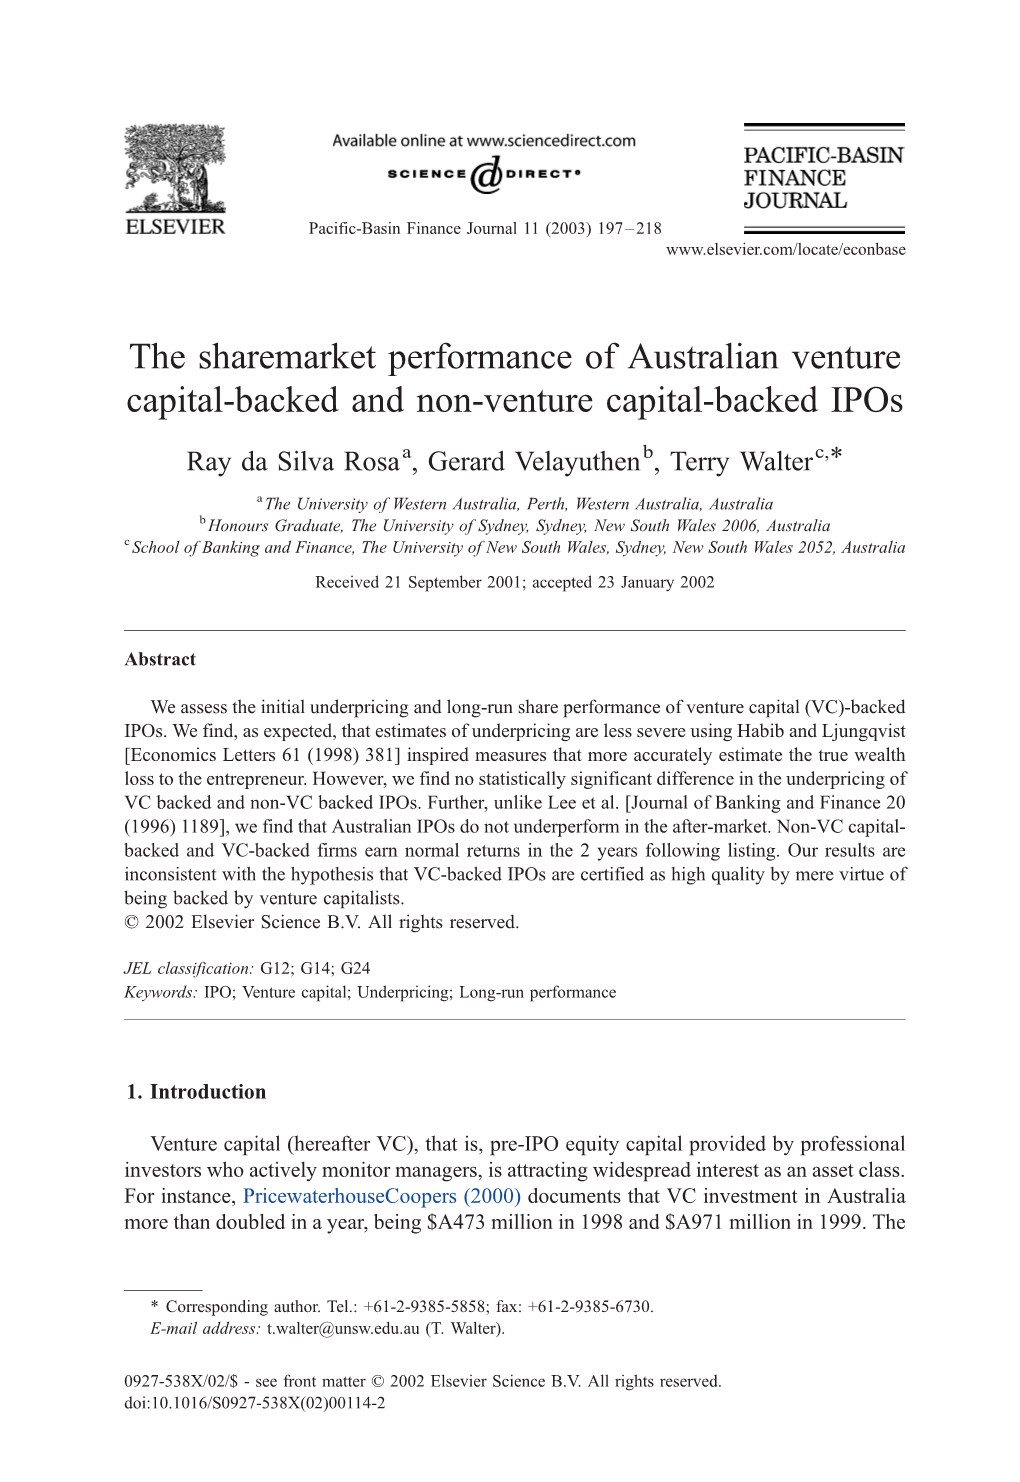 The Sharemarket Performance of Australian Venture Capital-Backed and Non-Venture Capital-Backed Ipos